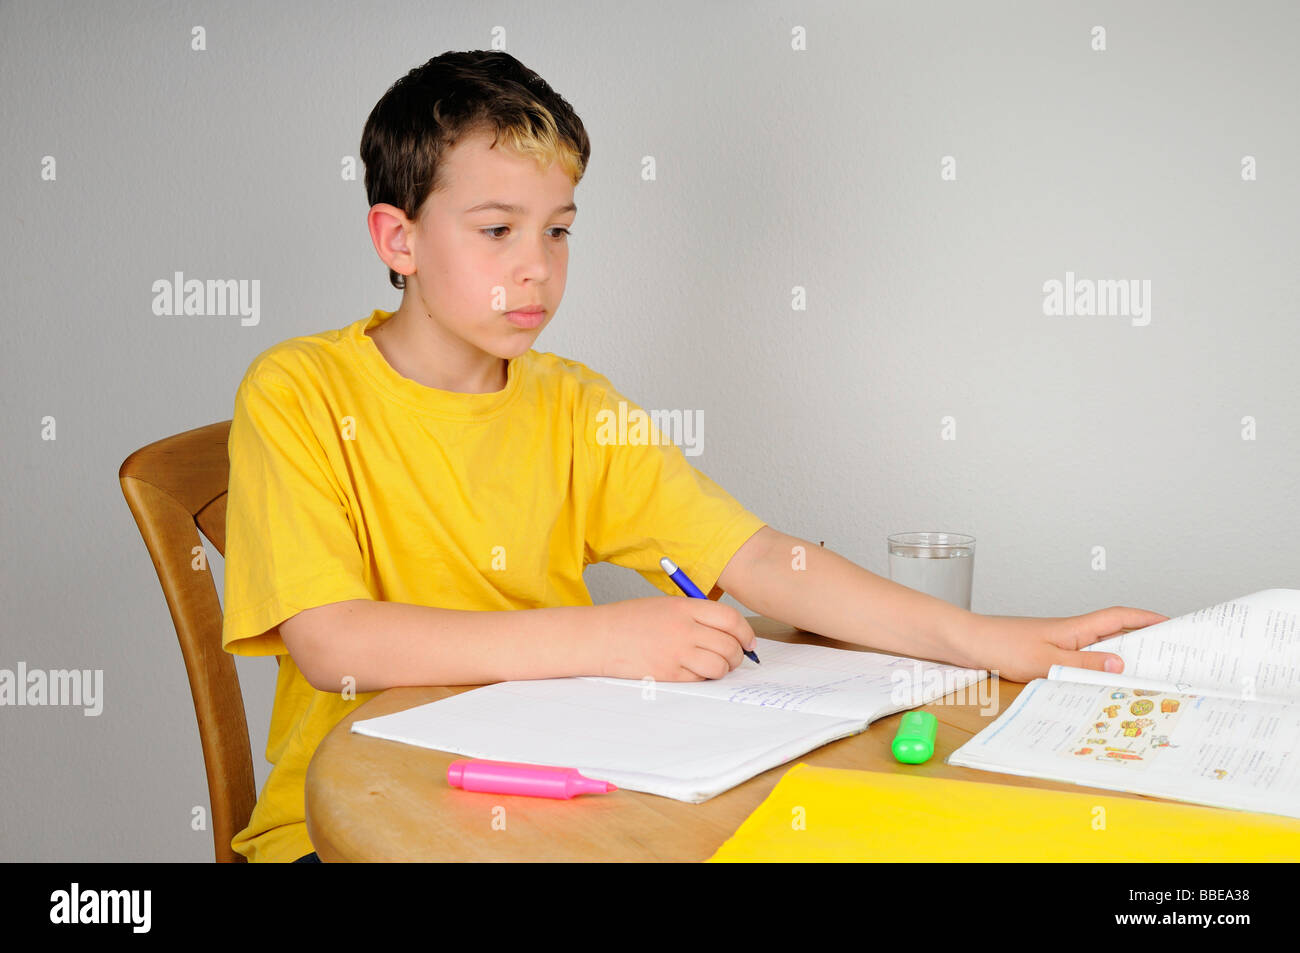 Boy doing homework for school Stock Photo